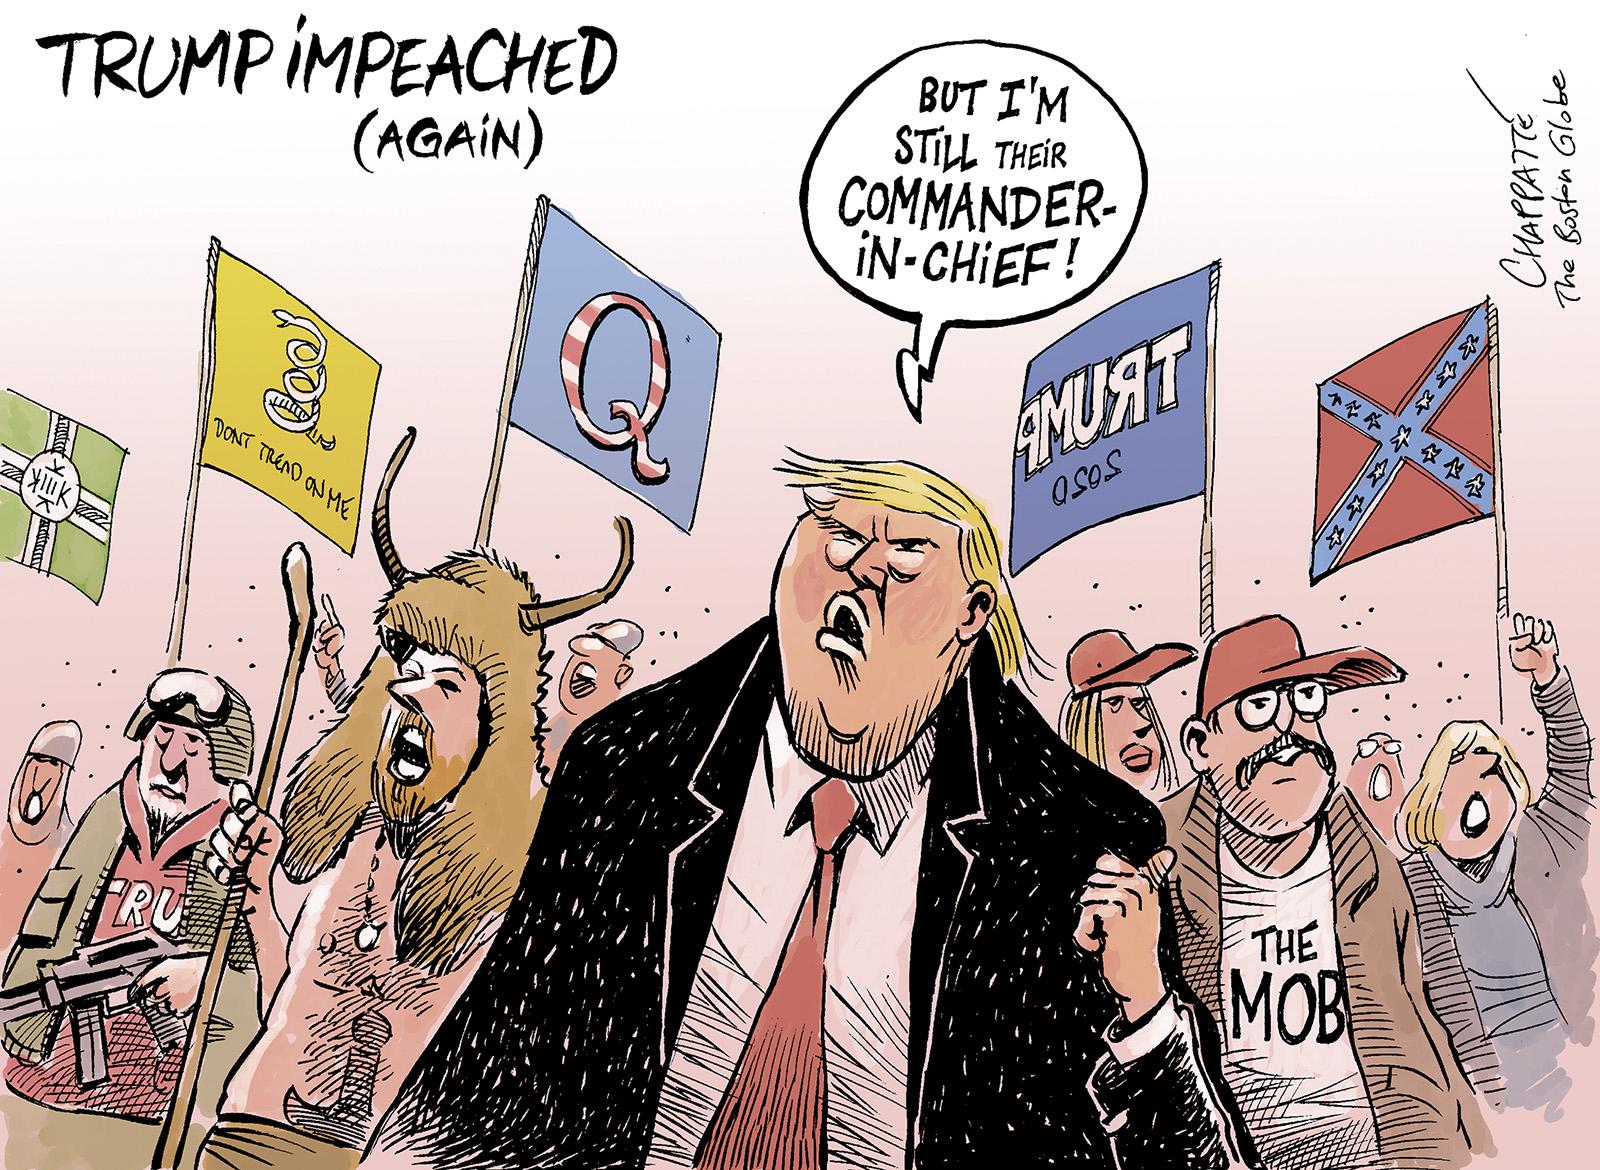 Trump impeached (again)